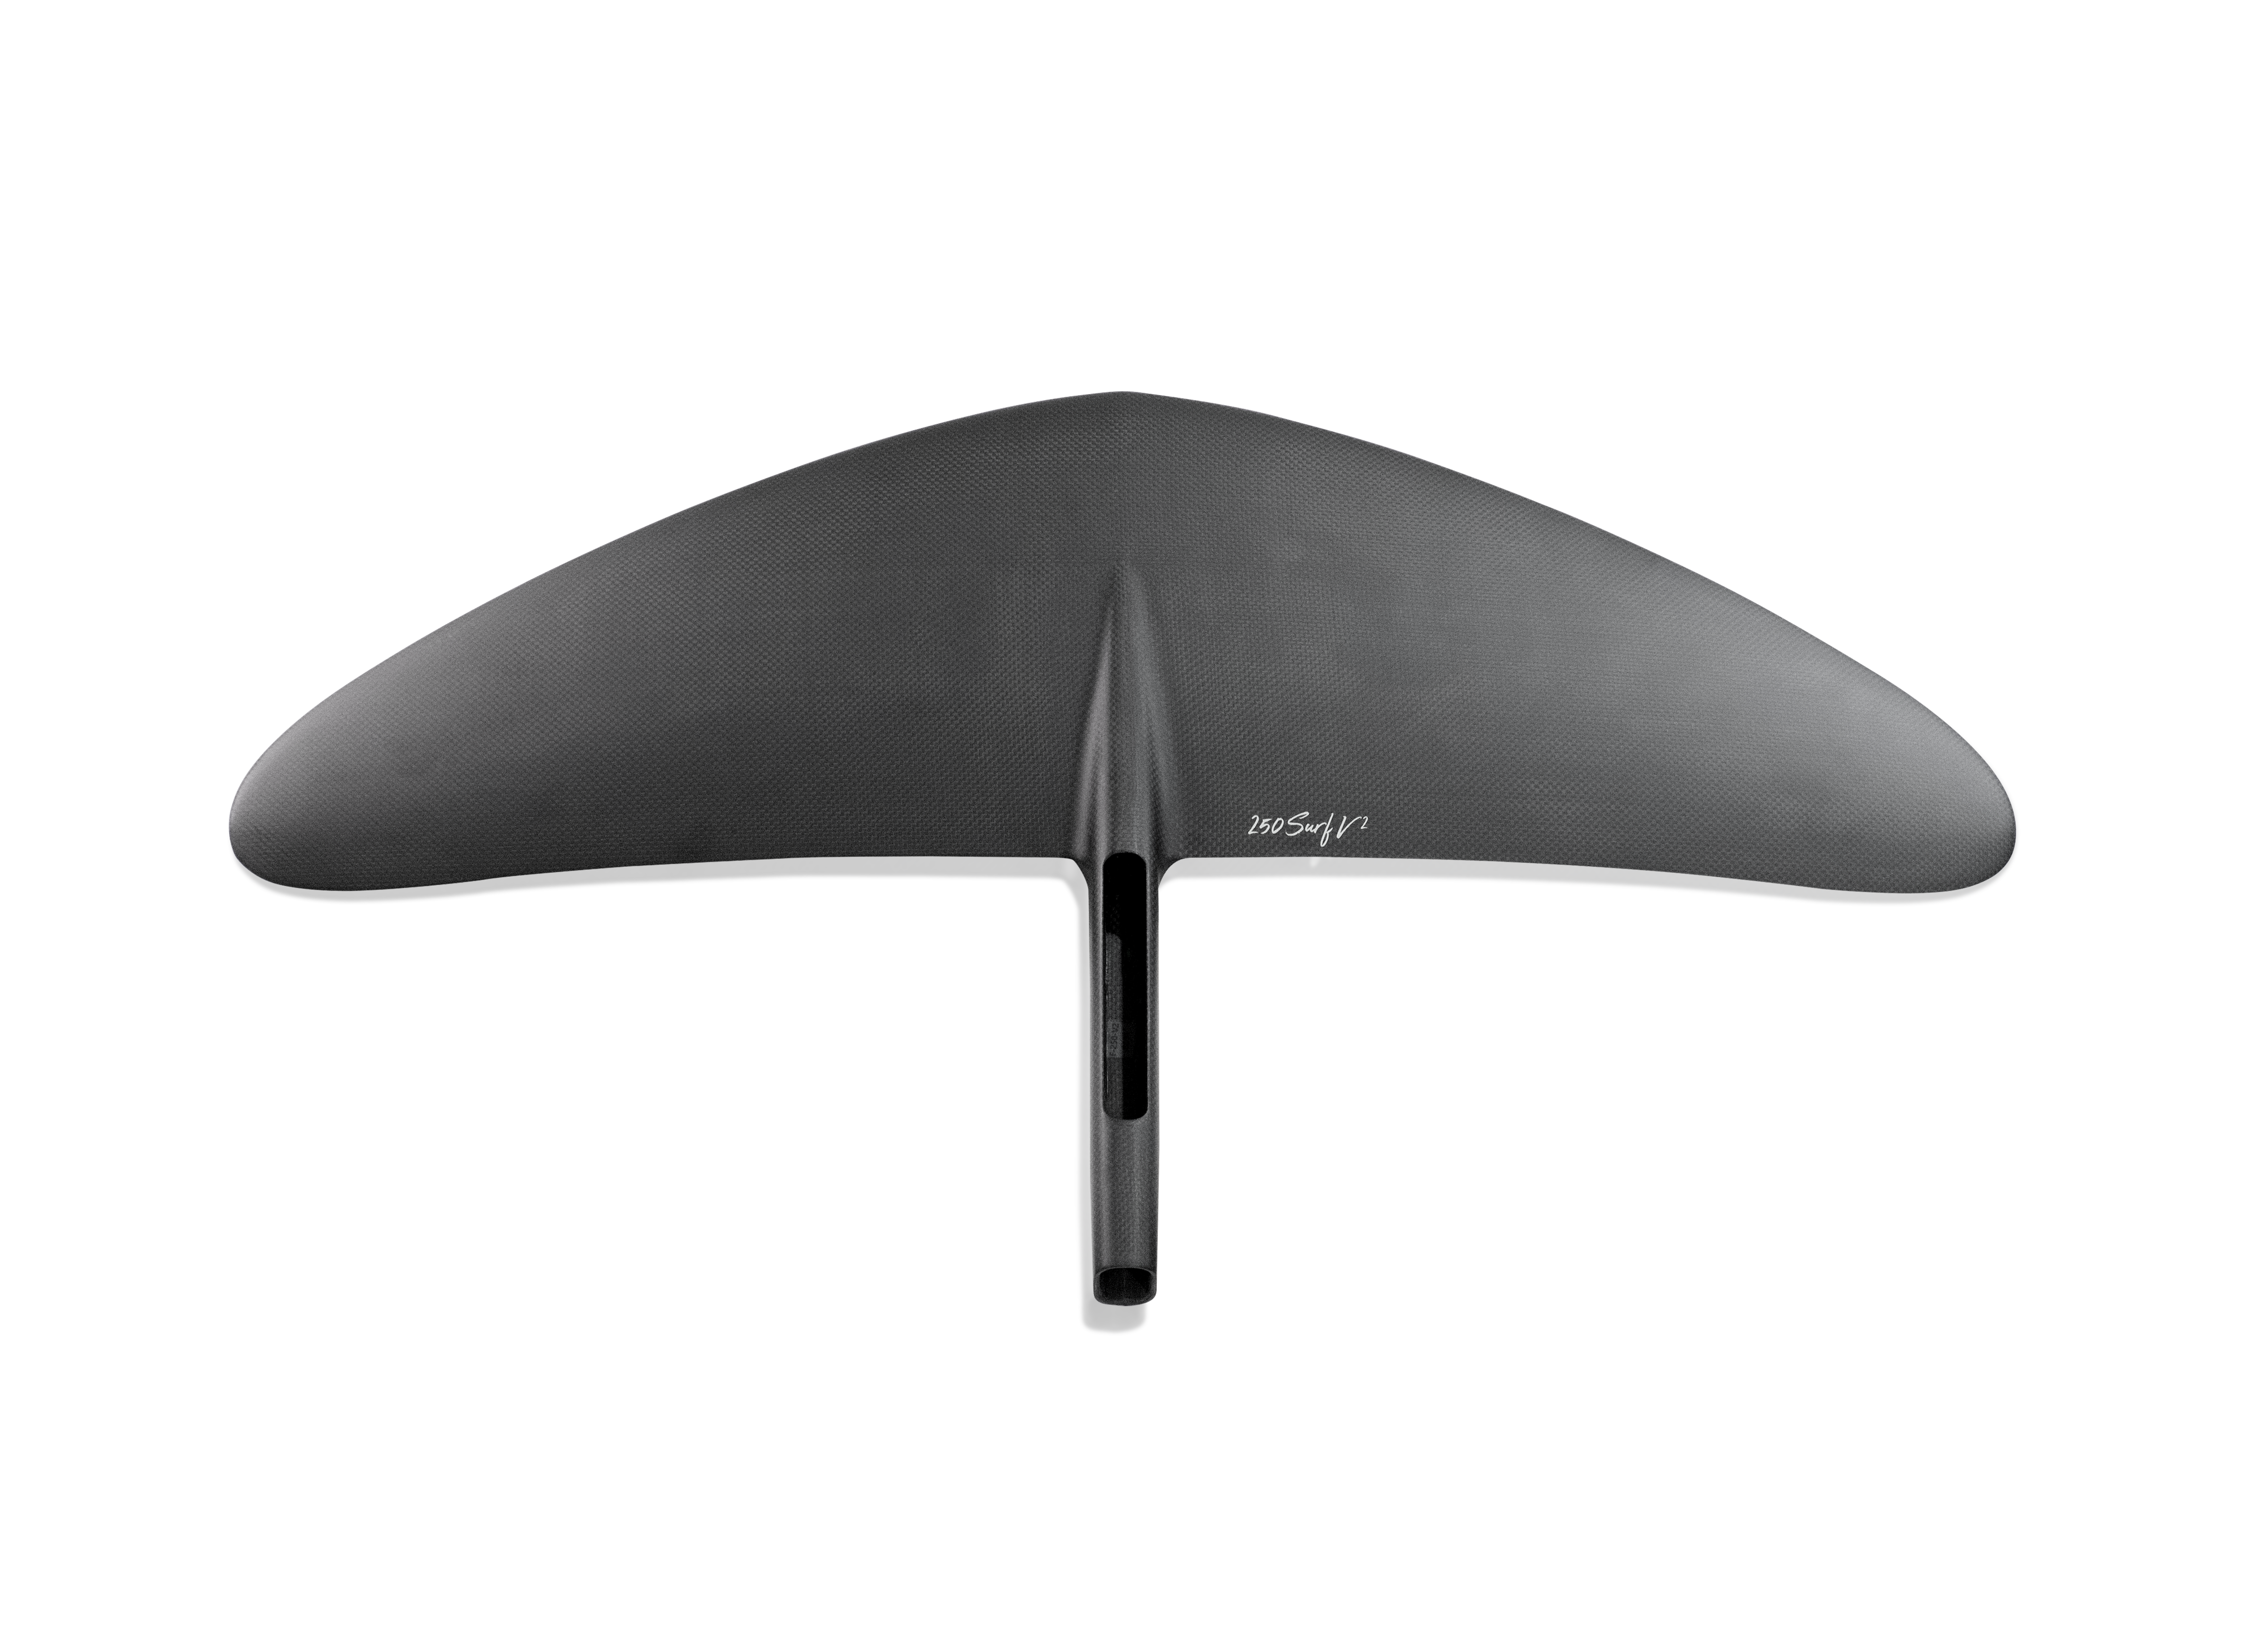 eFoil Electric Surfboard | Hydrofoil Wings - Lift Foils